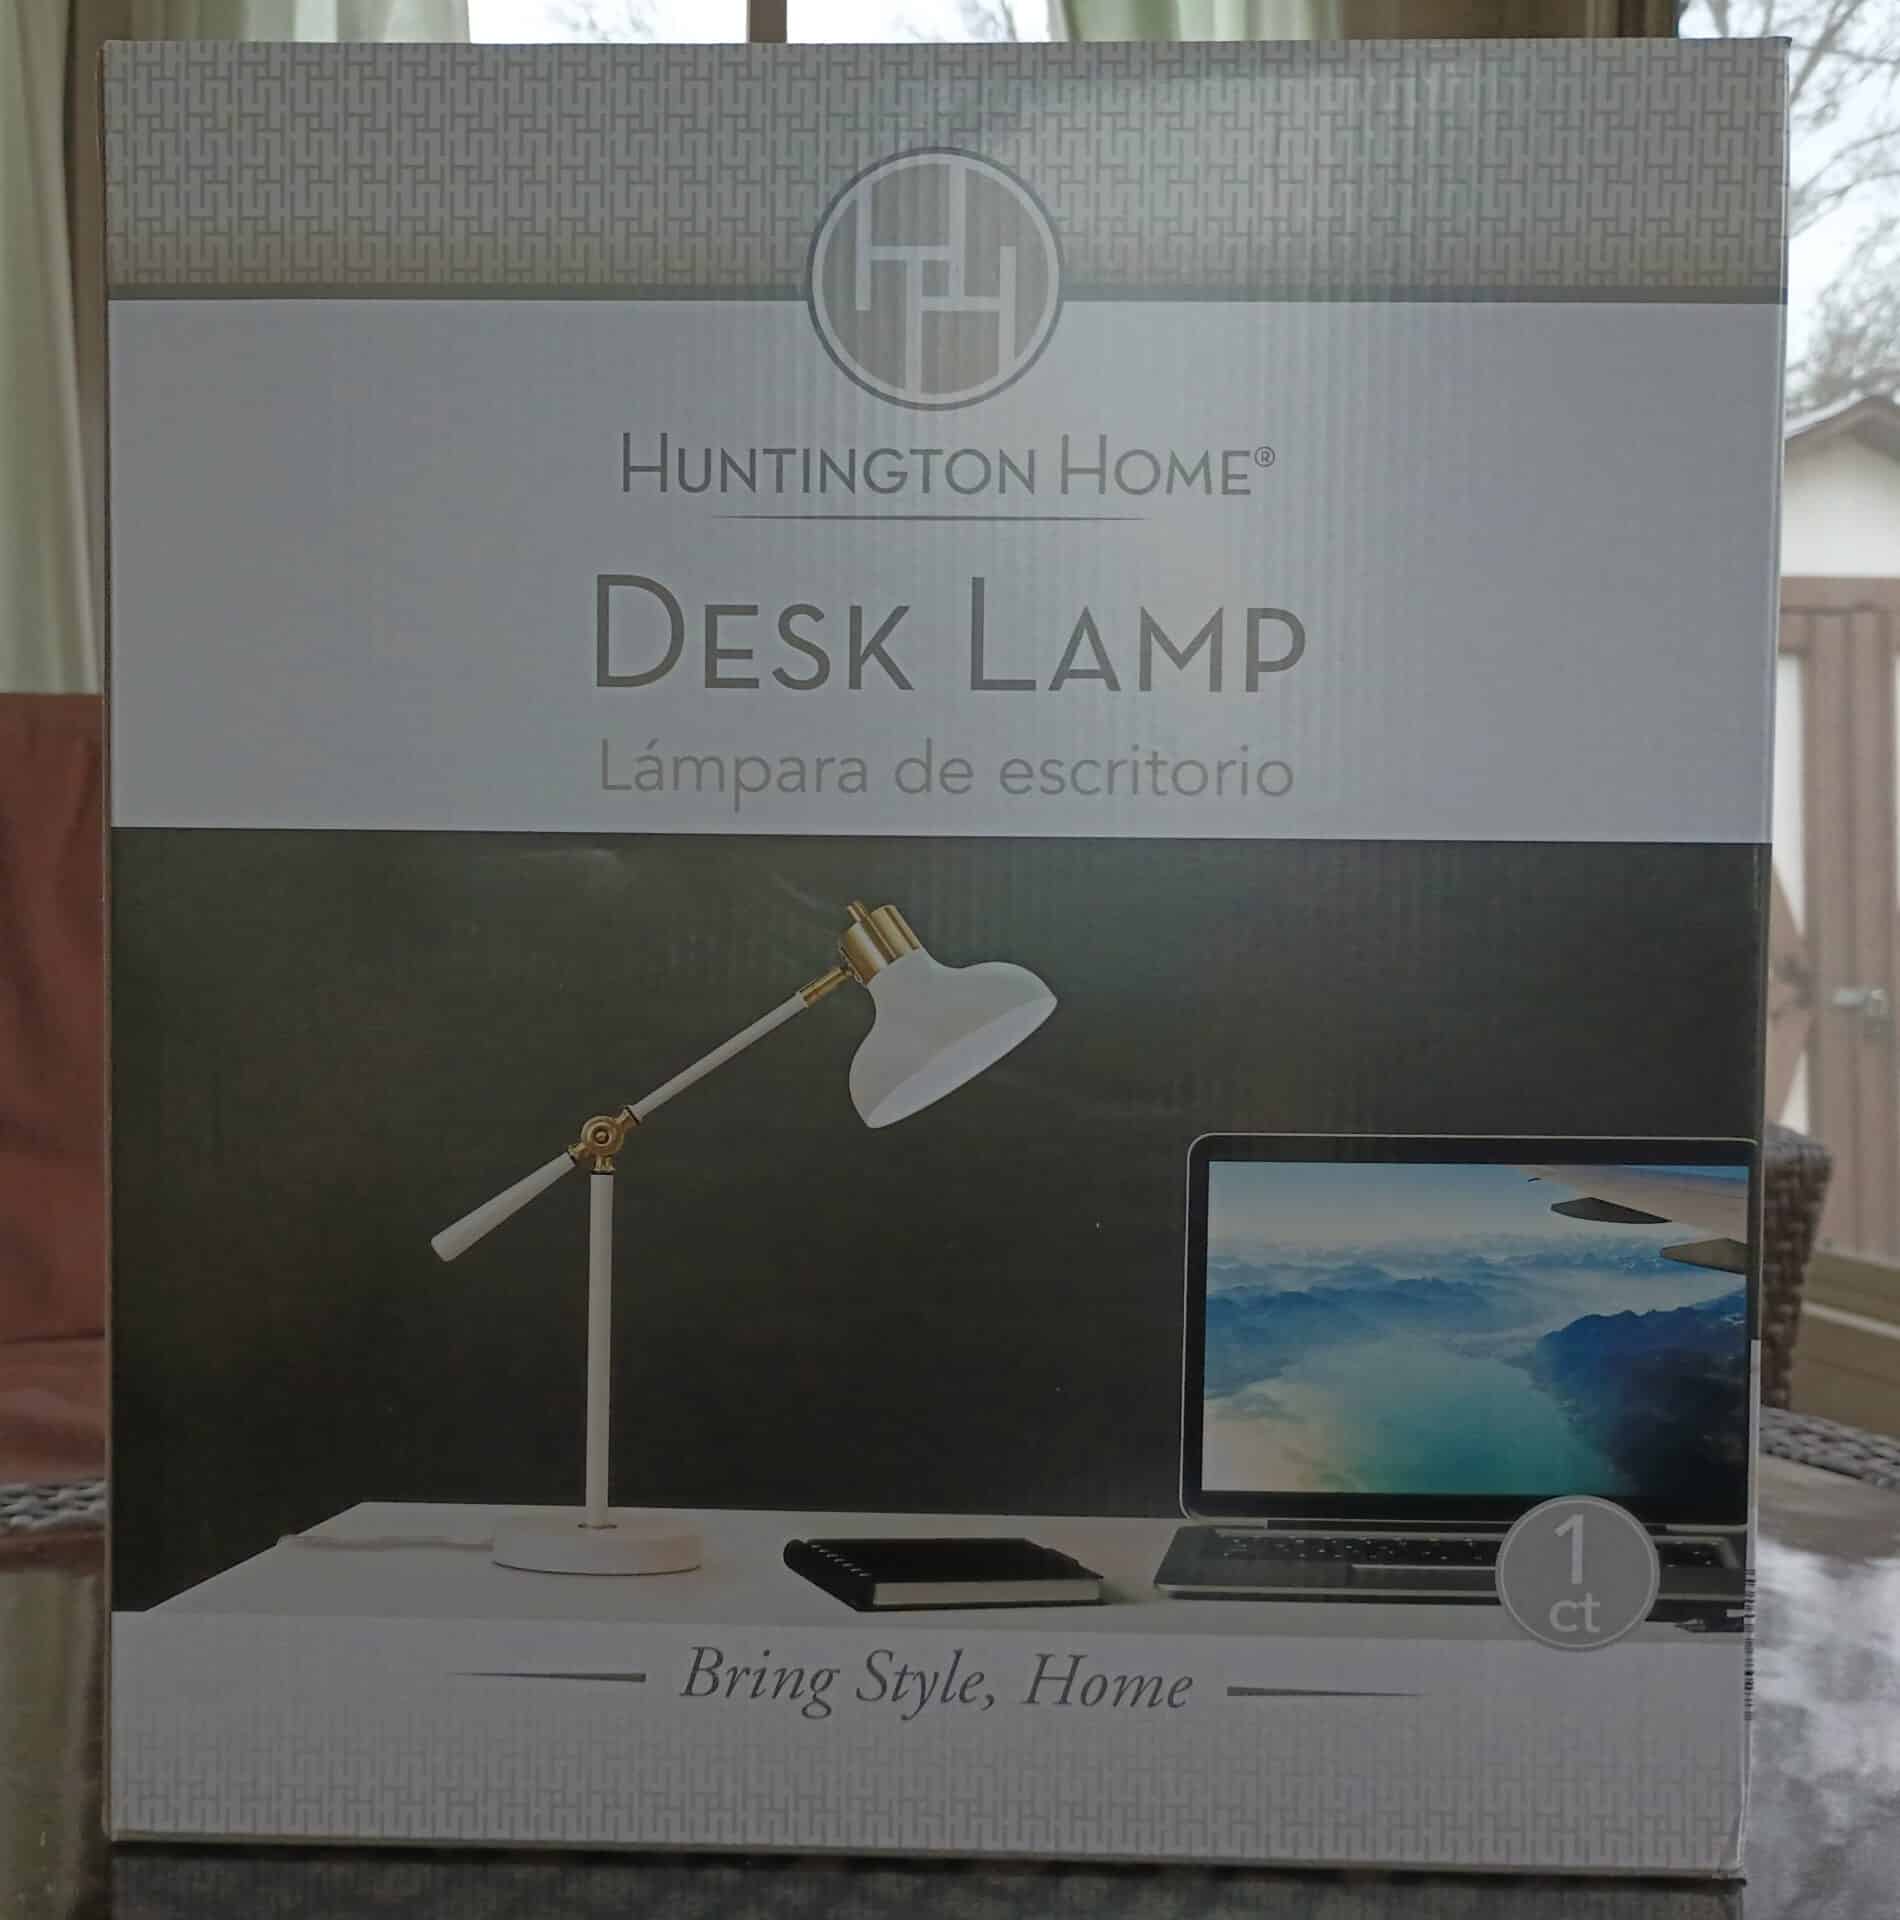 The Huntington Home Desk Lamp